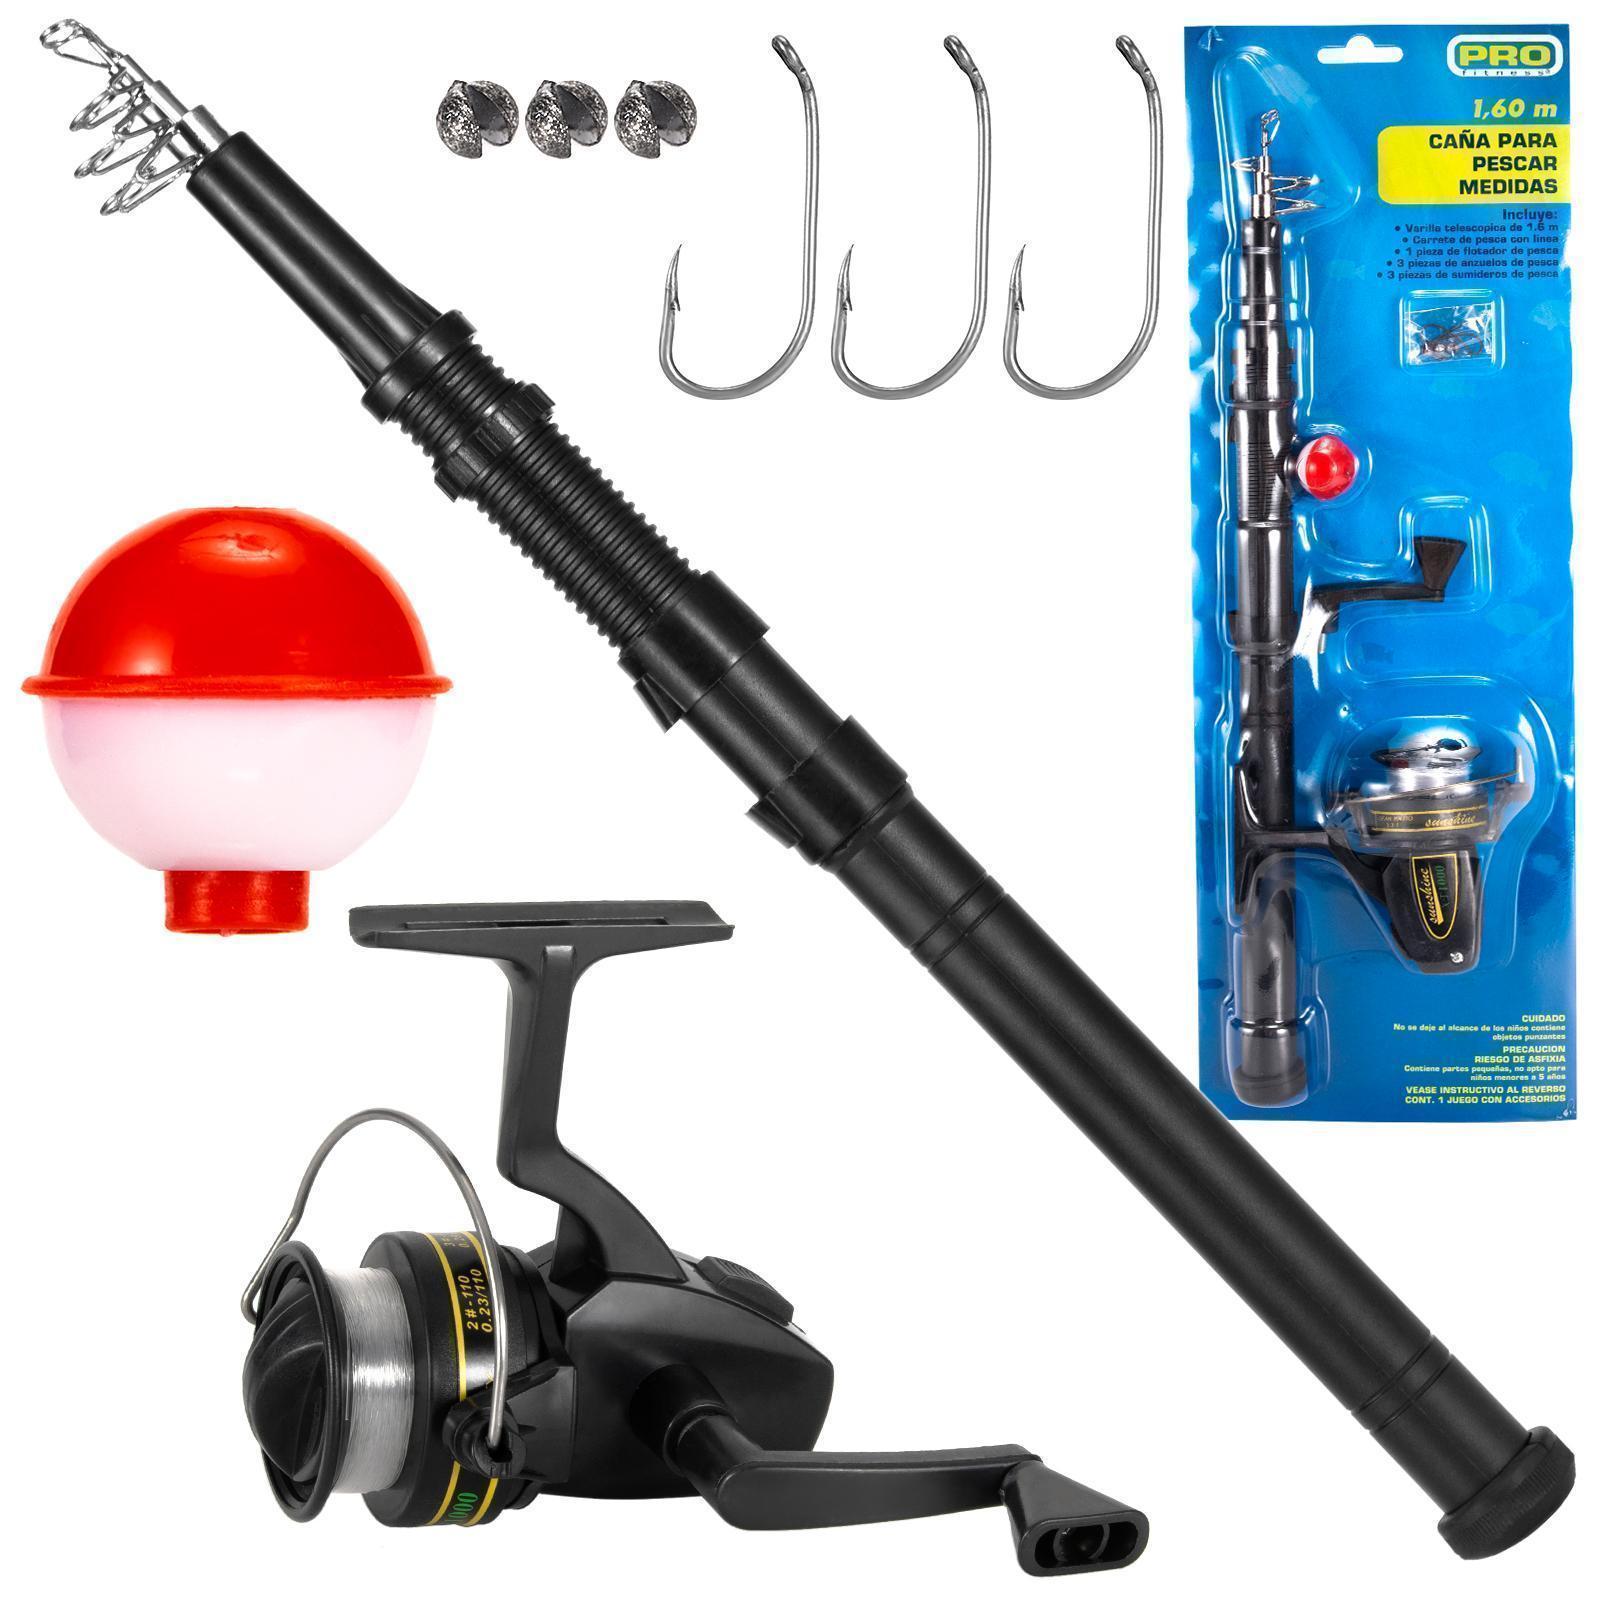  Fishing Rod & Reel Combos - Ugly Stik / Fishing Rod